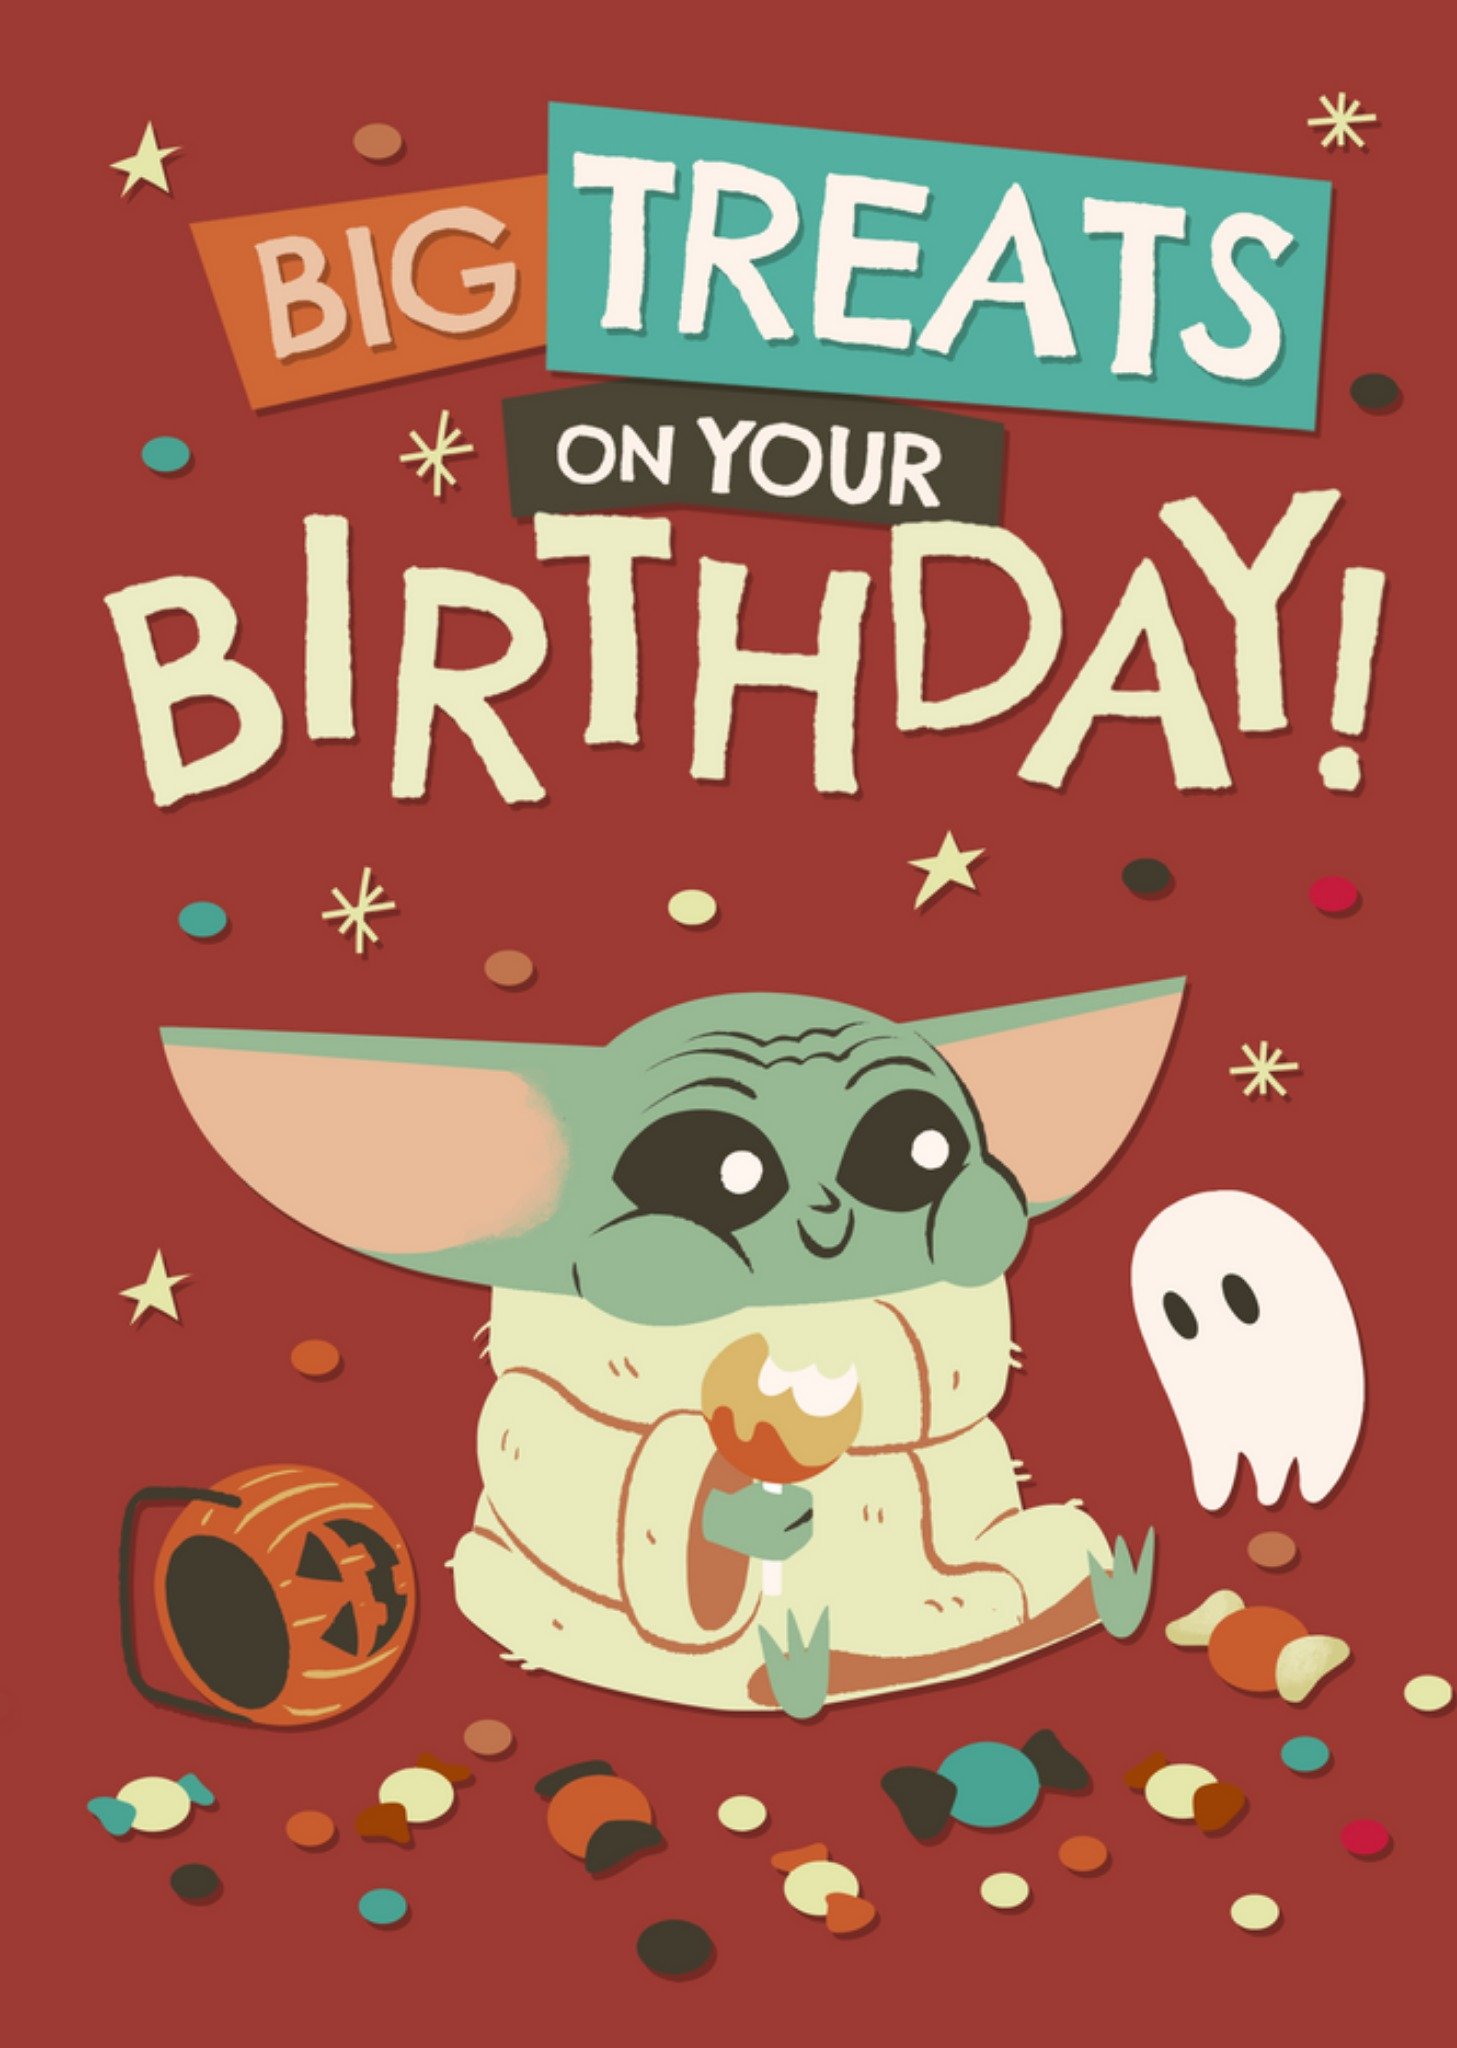 Disney Star Wars The Mandalorian Big Treats On Your Birthday Card Ecard